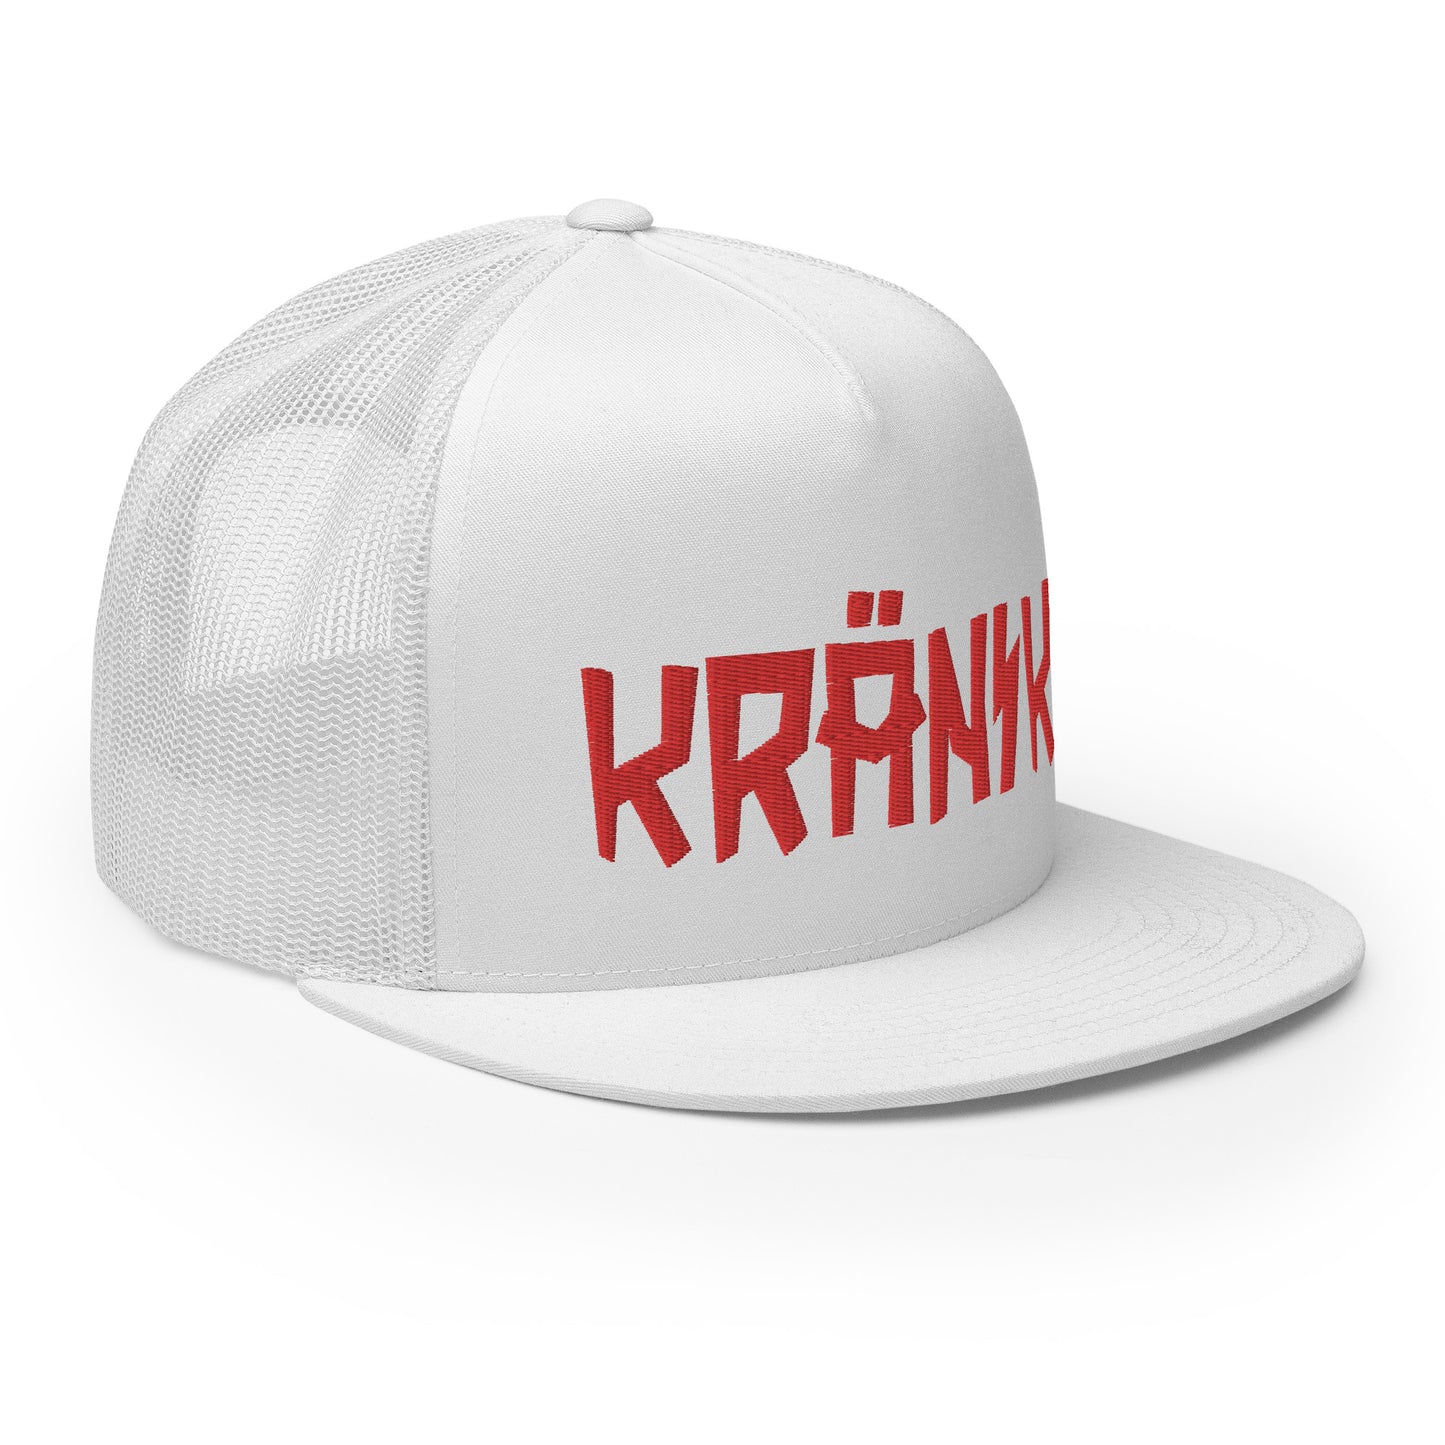 Kranik Brand Hat / Trucker Cap / Moto Logo / 3D Puff / White / Red